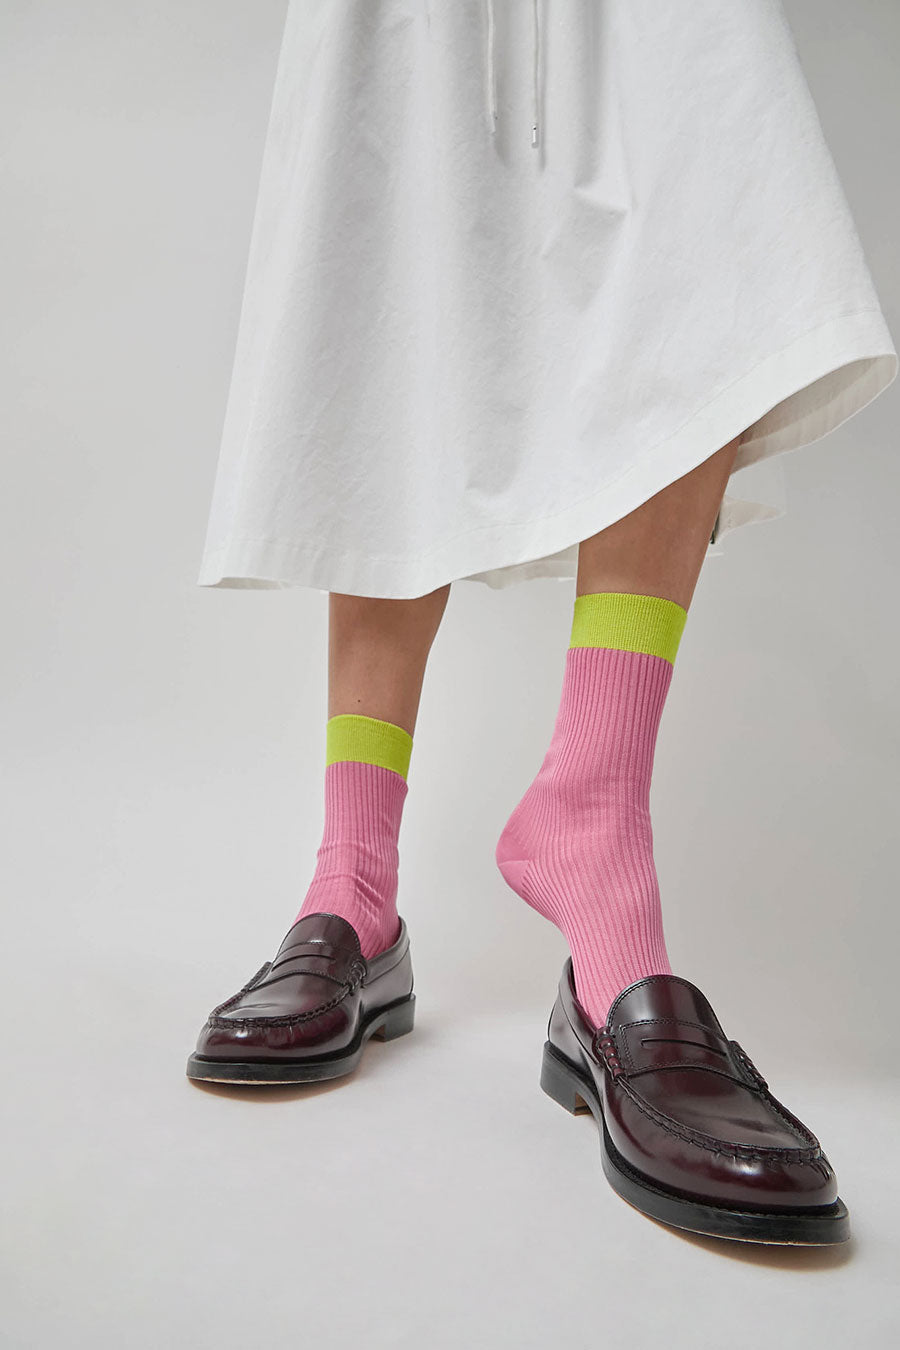 Maria La Rosa Neon Tipped Mid Calf Socks in Pink